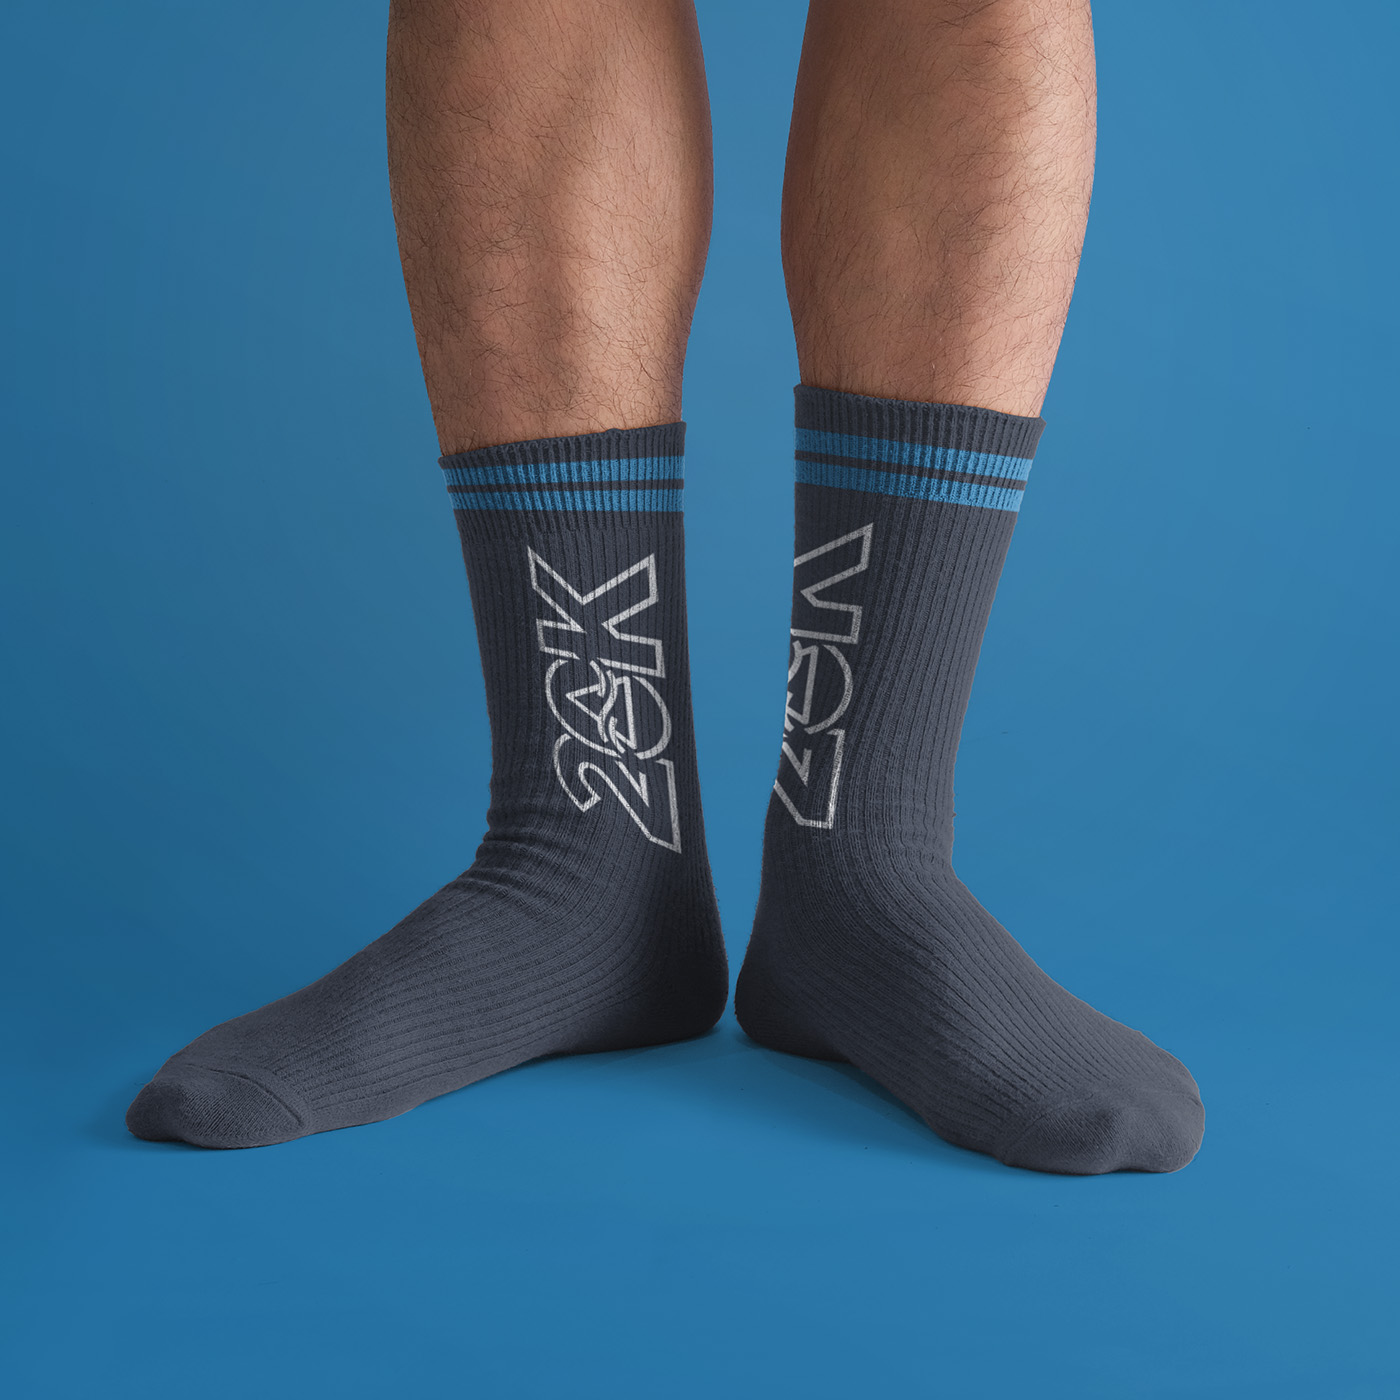 fun logo design application on socks